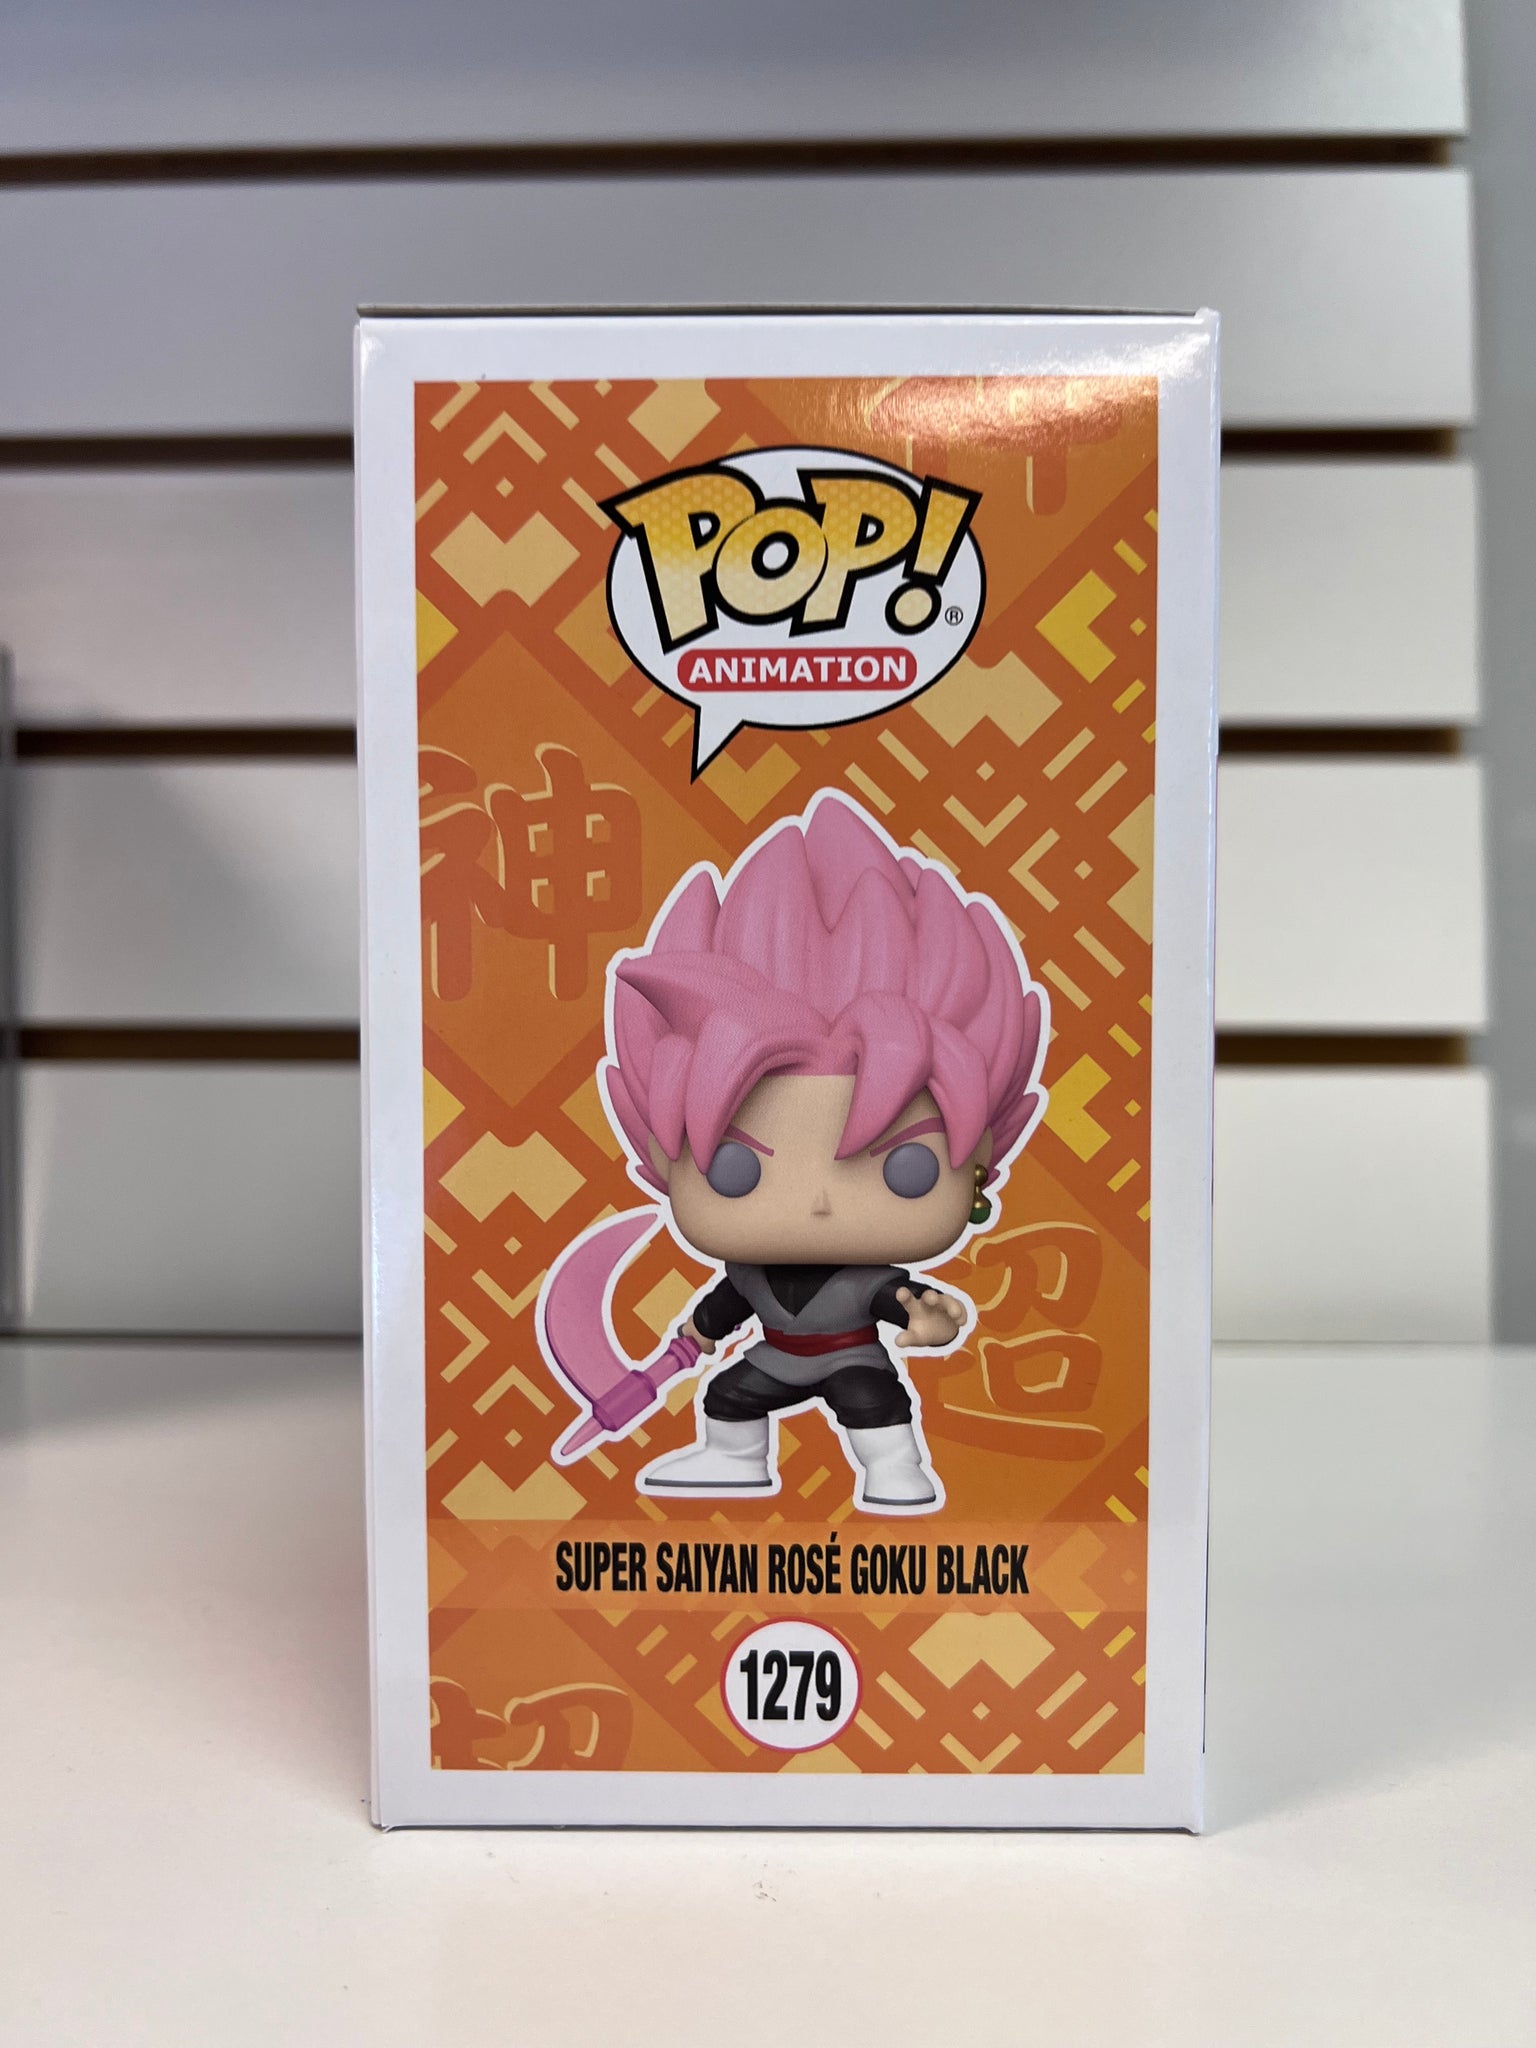 Buy Pop! Super Saiyan Rosé Goku Black at Funko.